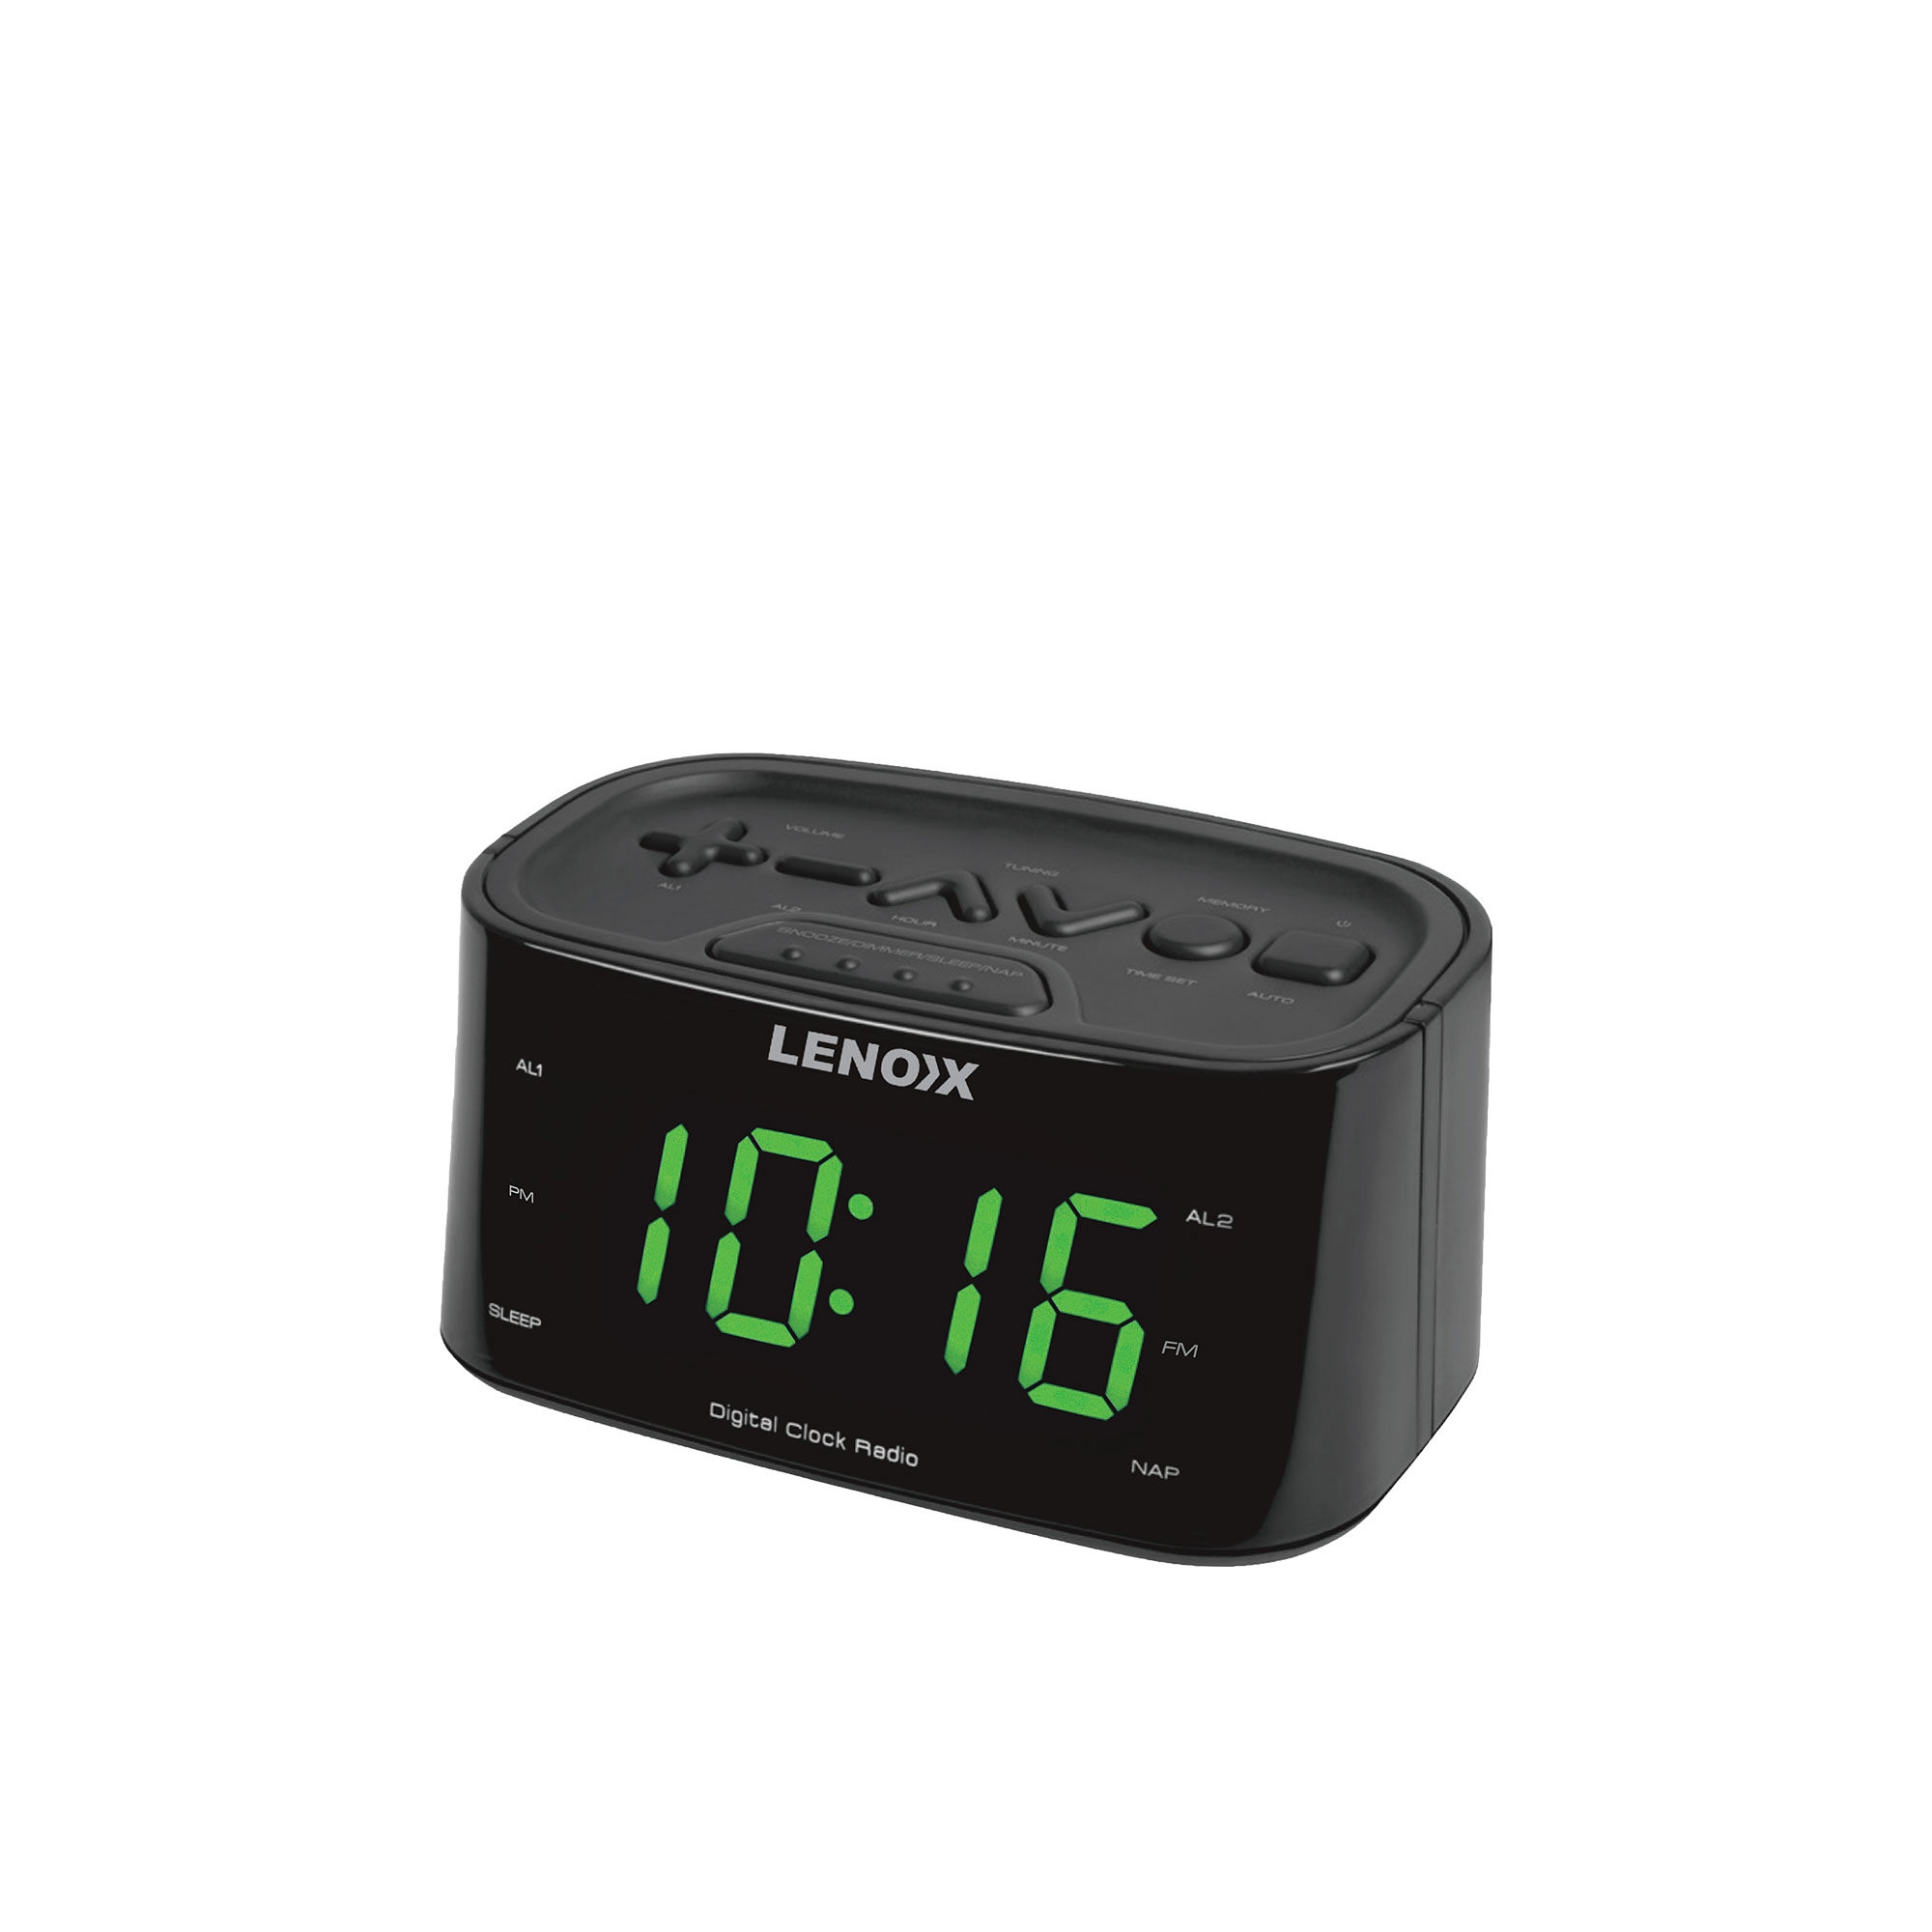 Lenoxx FM Radio Dual Alarm Clock with USB Charging Port Black Image 1